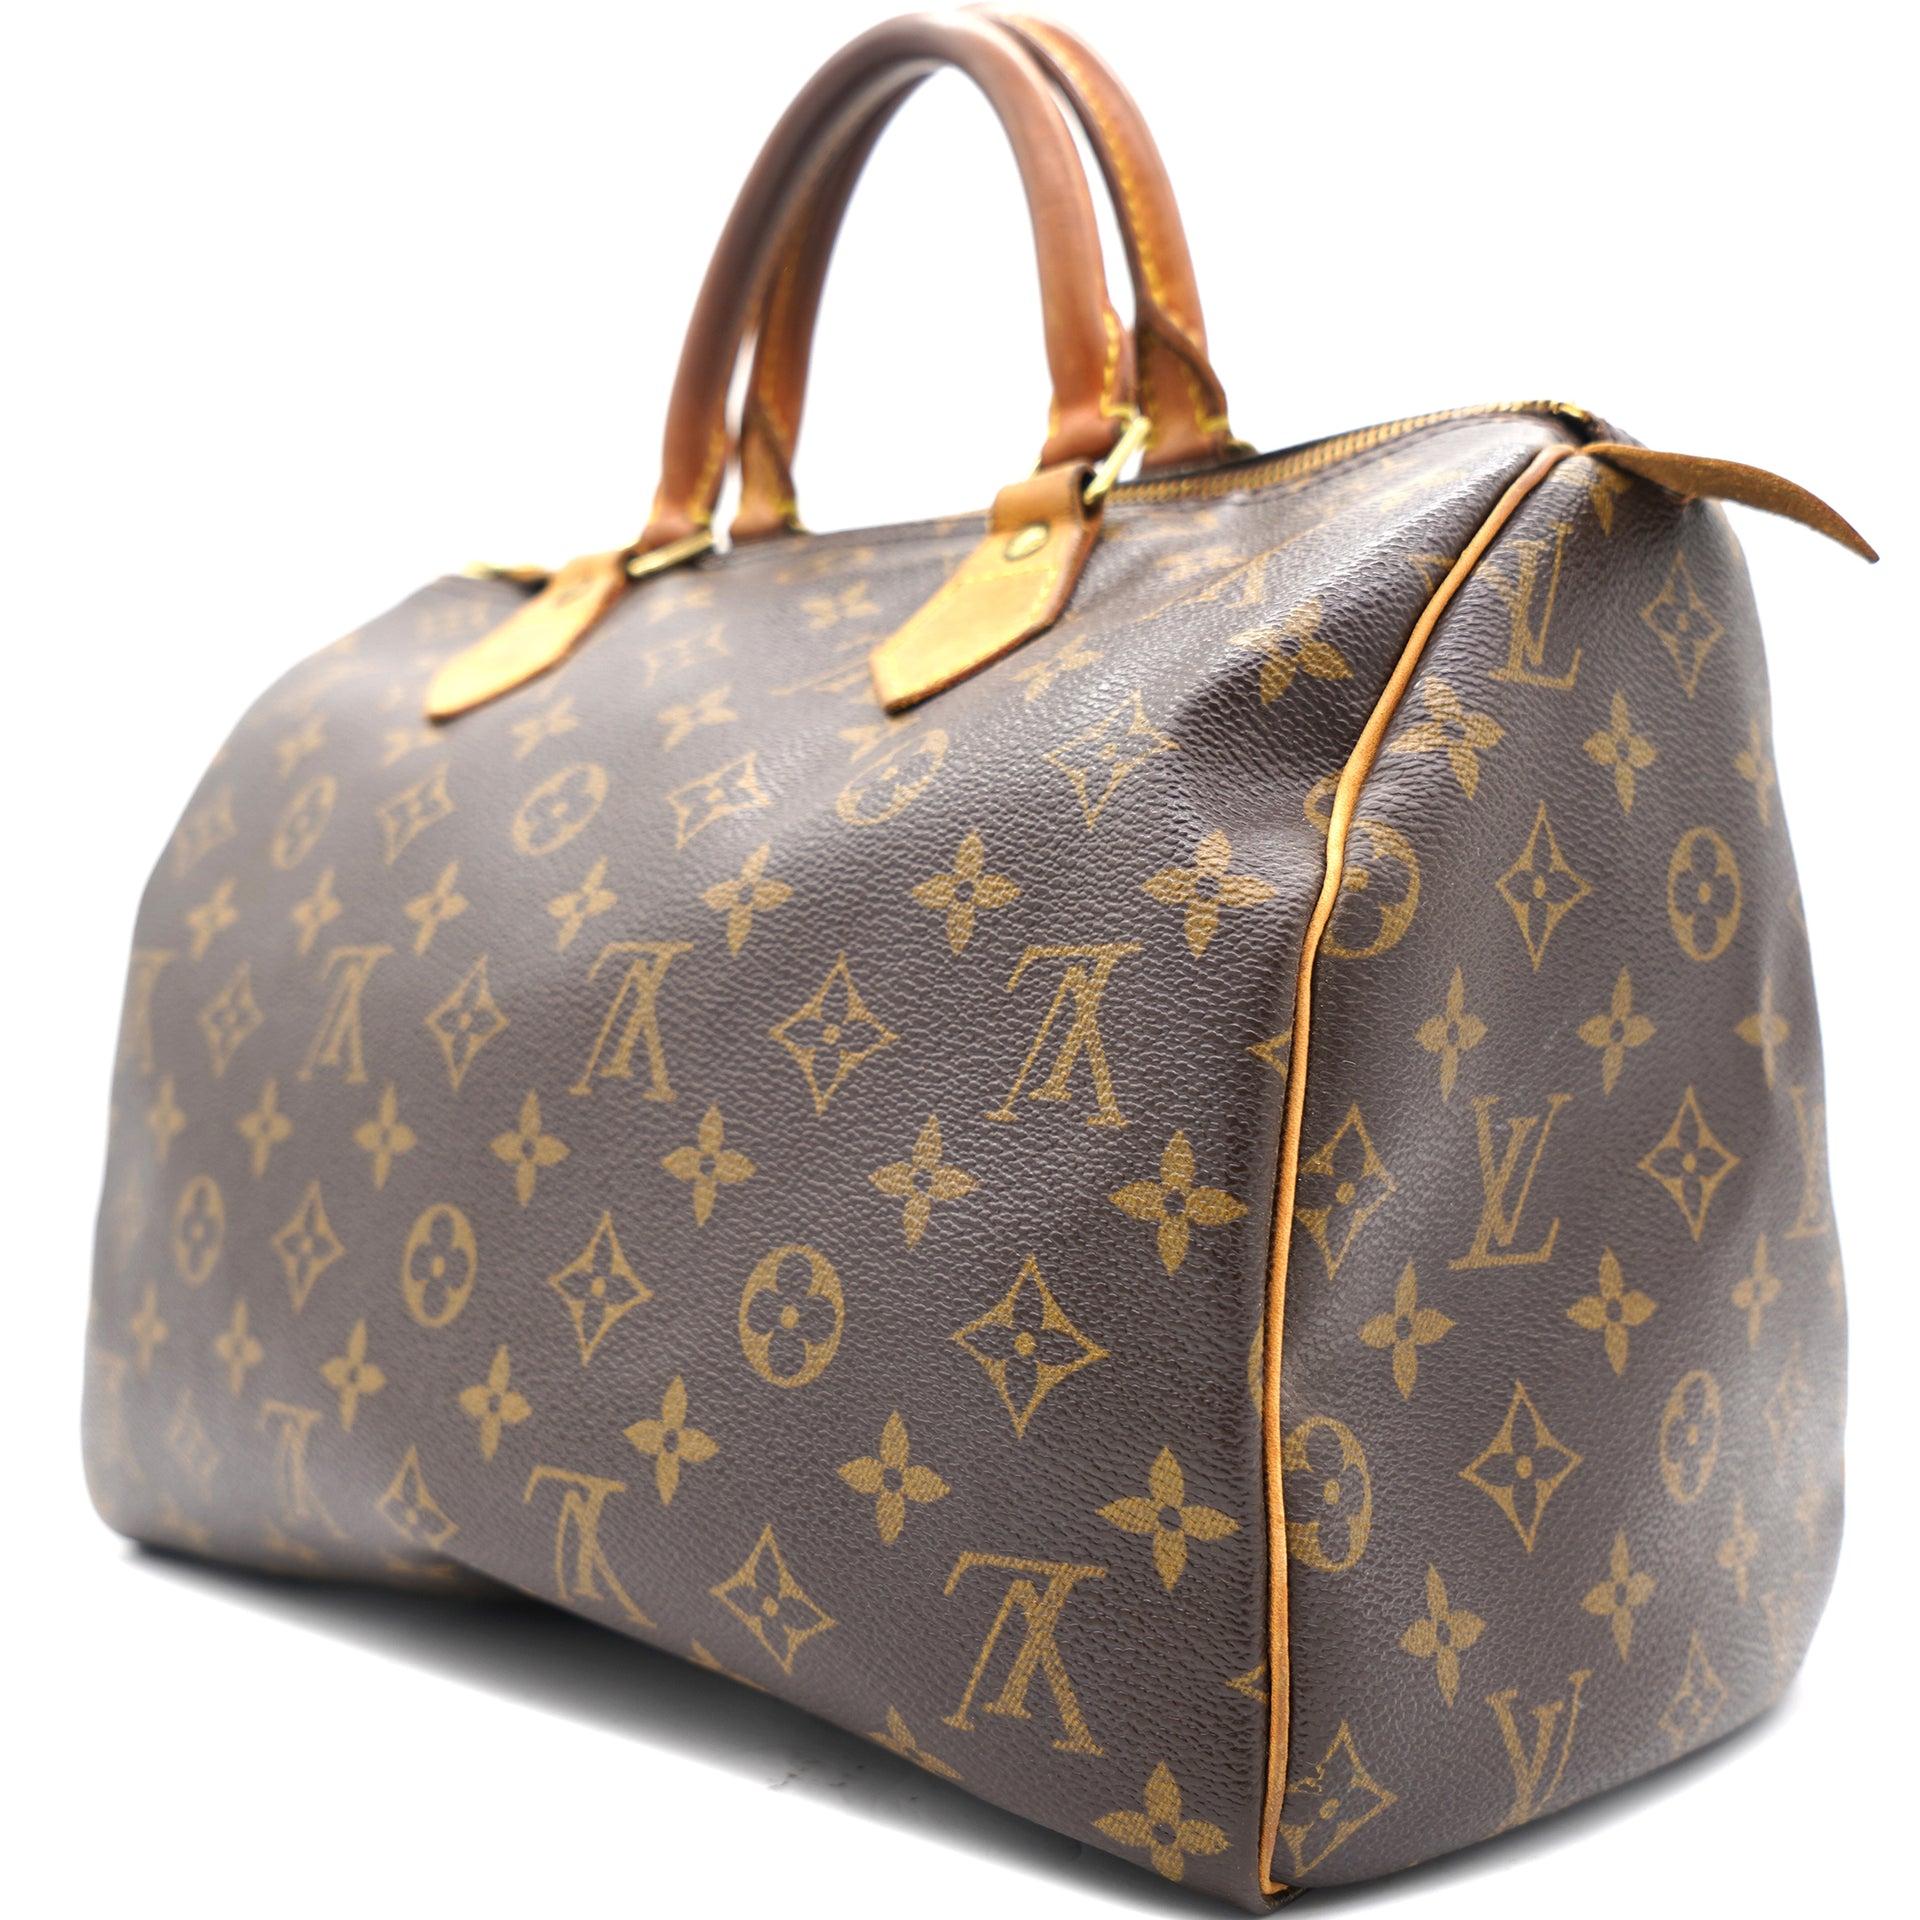 Louis Vuitton Speedy 30 Louis Vuitton 12 Duffel Bag Louis Vuitton Monogram  Satchel 12 Classic Louis Vuitton 12 Handbag 